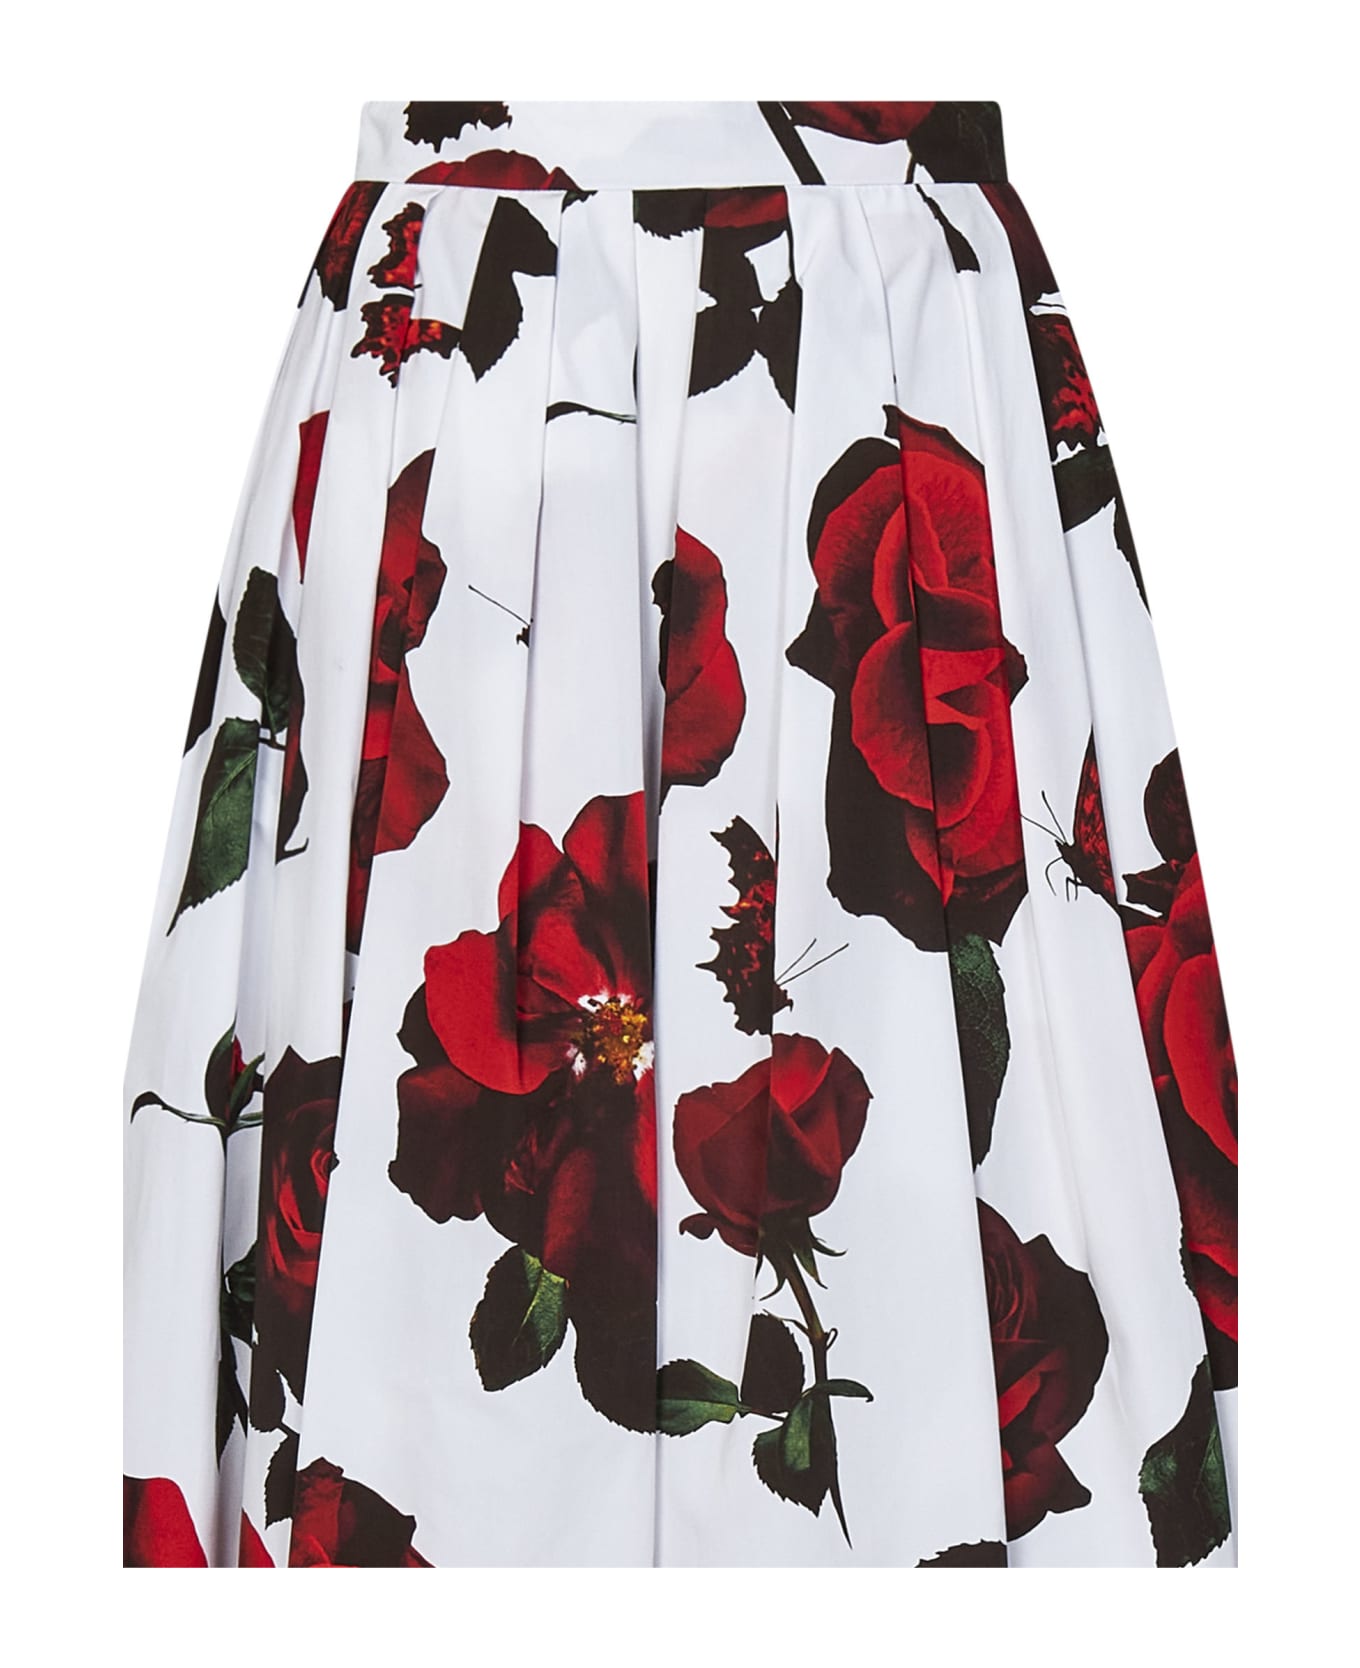 Alexander McQueen Tudor Rose Print Pleated Midi Skirt In Cotton Woman - Multicolor